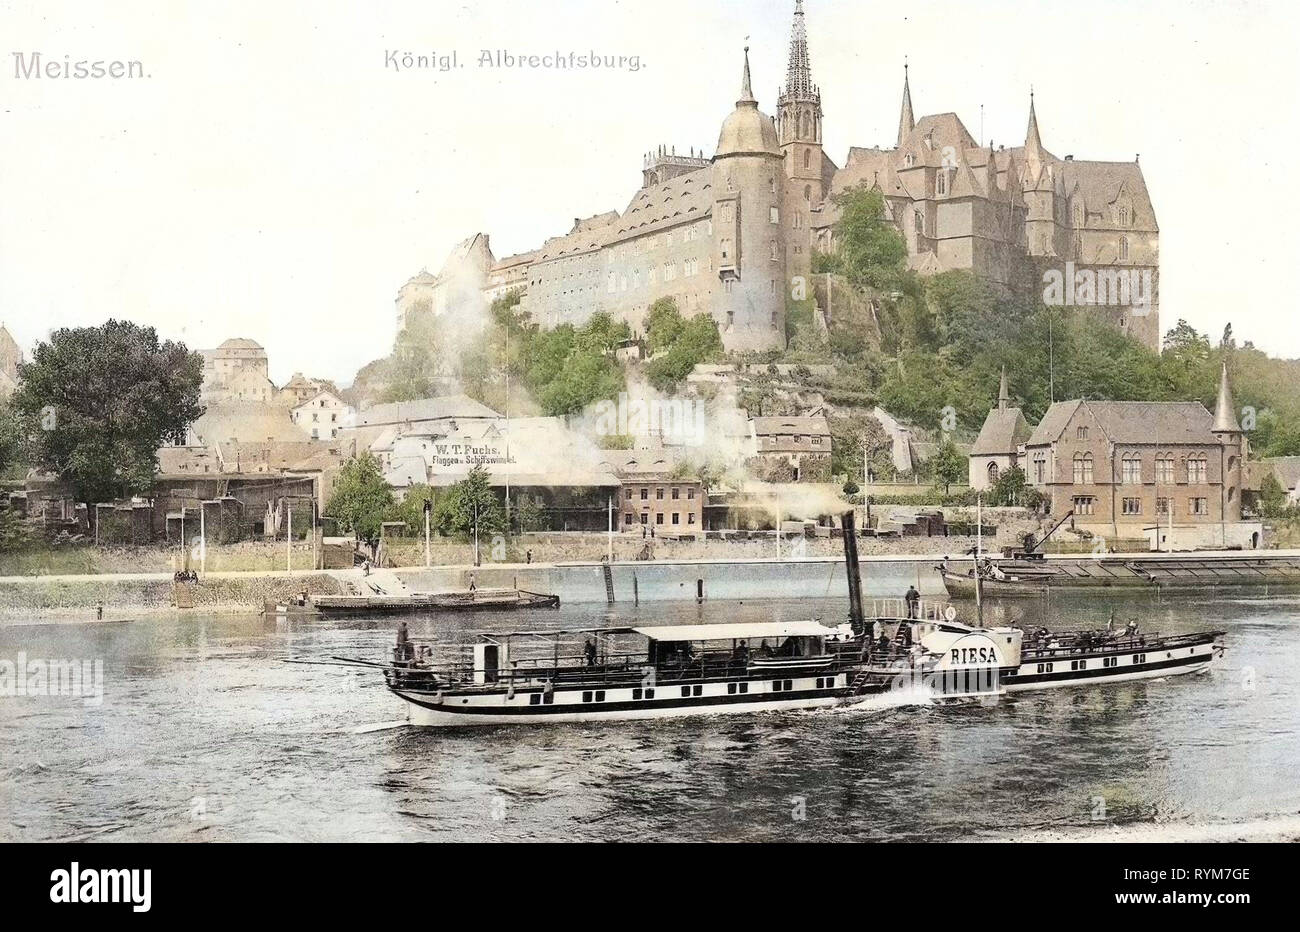 Albrechtsburg, Elbe in Meißen, Riesa (Ship, 1863), 1903, Meißen, Albrechtsburg mit Elbe und Dampfer Riesa, Germany Stock Photo